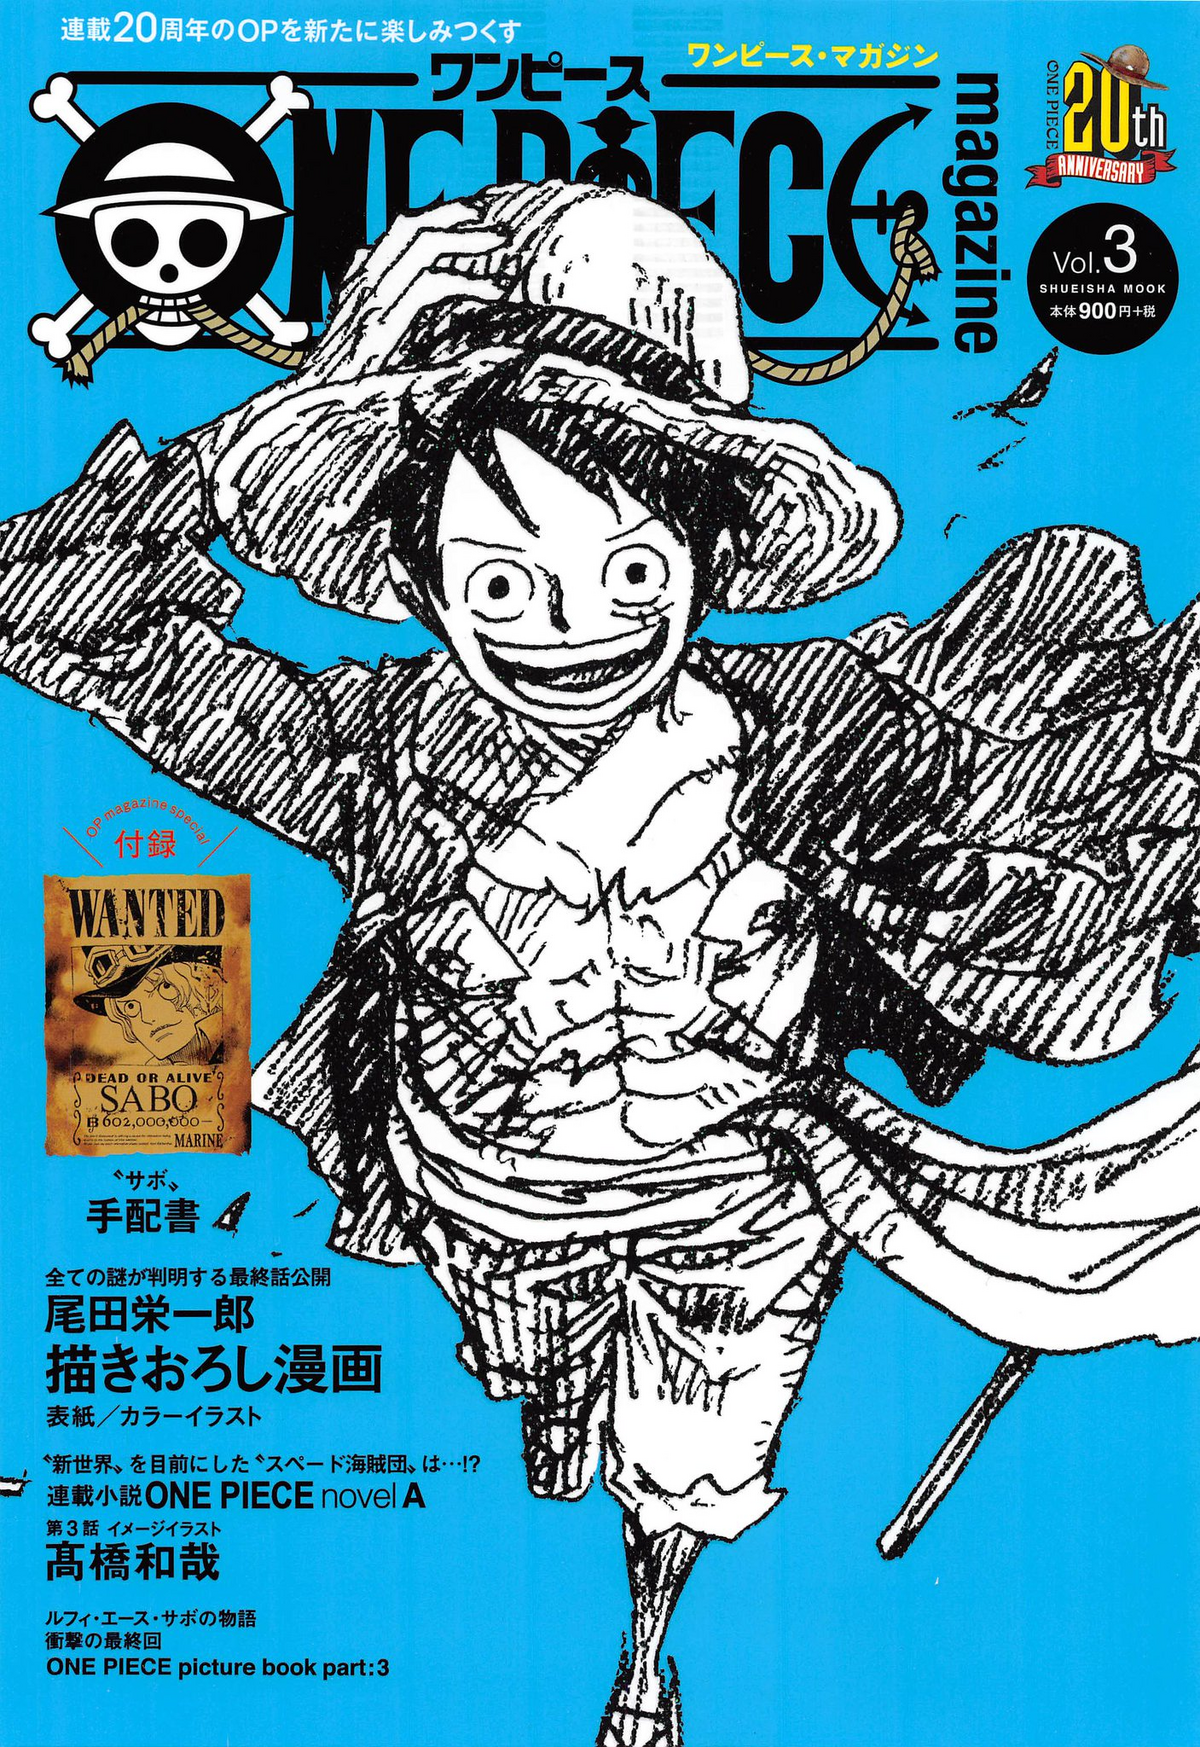 Vol.3 Two Pieces - Manga - Manga news